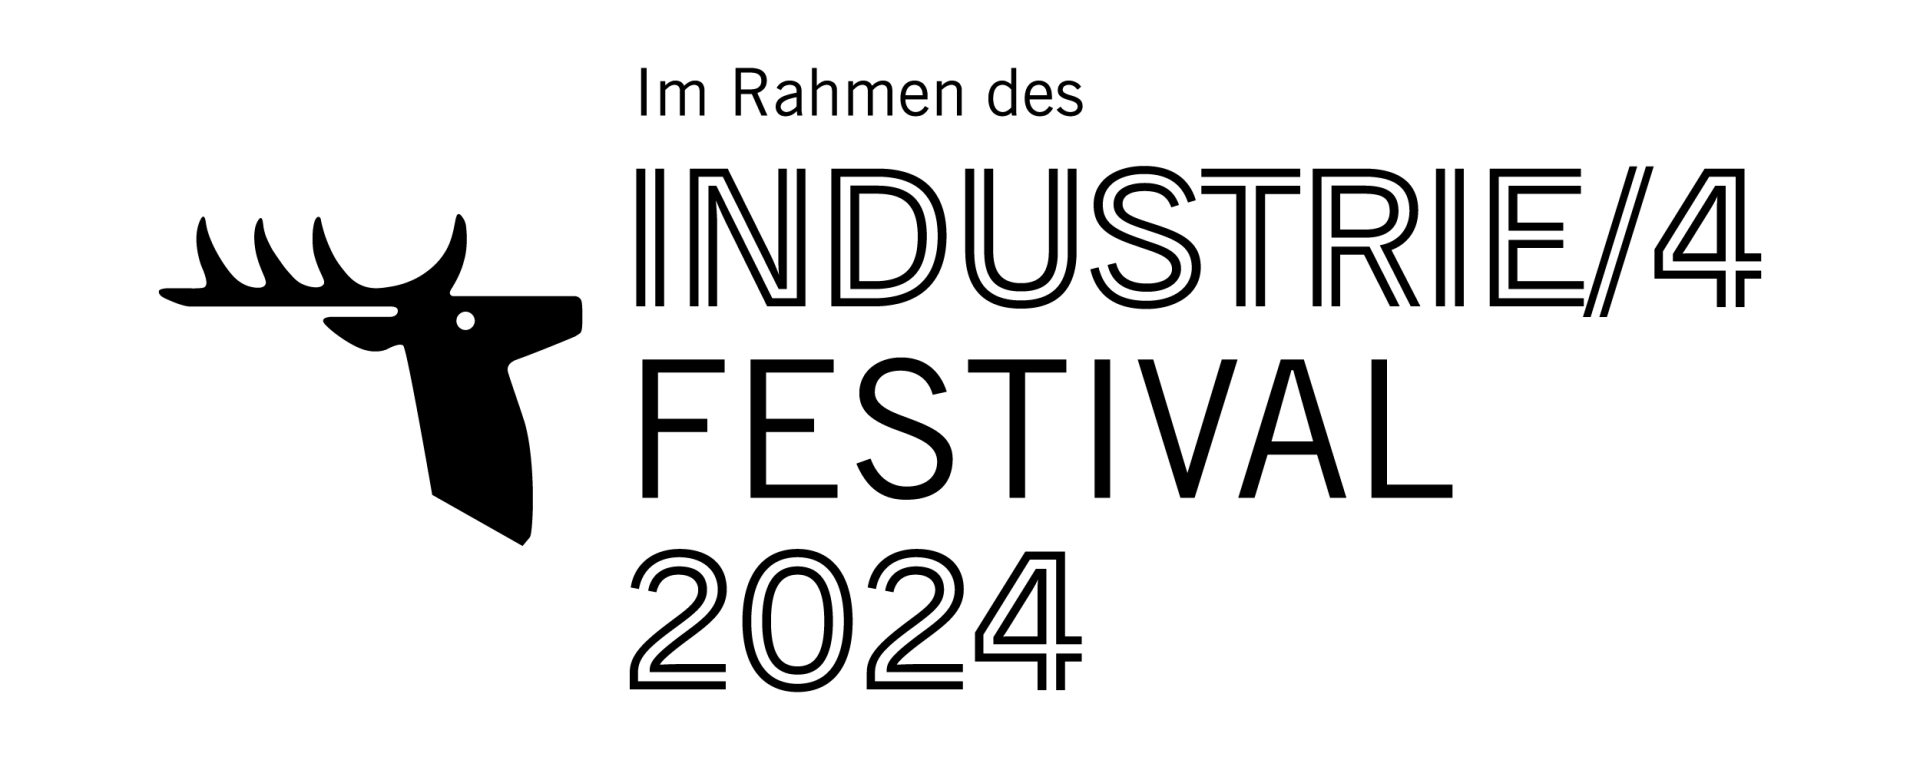 Logo Industrieviertelfestival 2024 Logo Industrieviertelfestival 2024